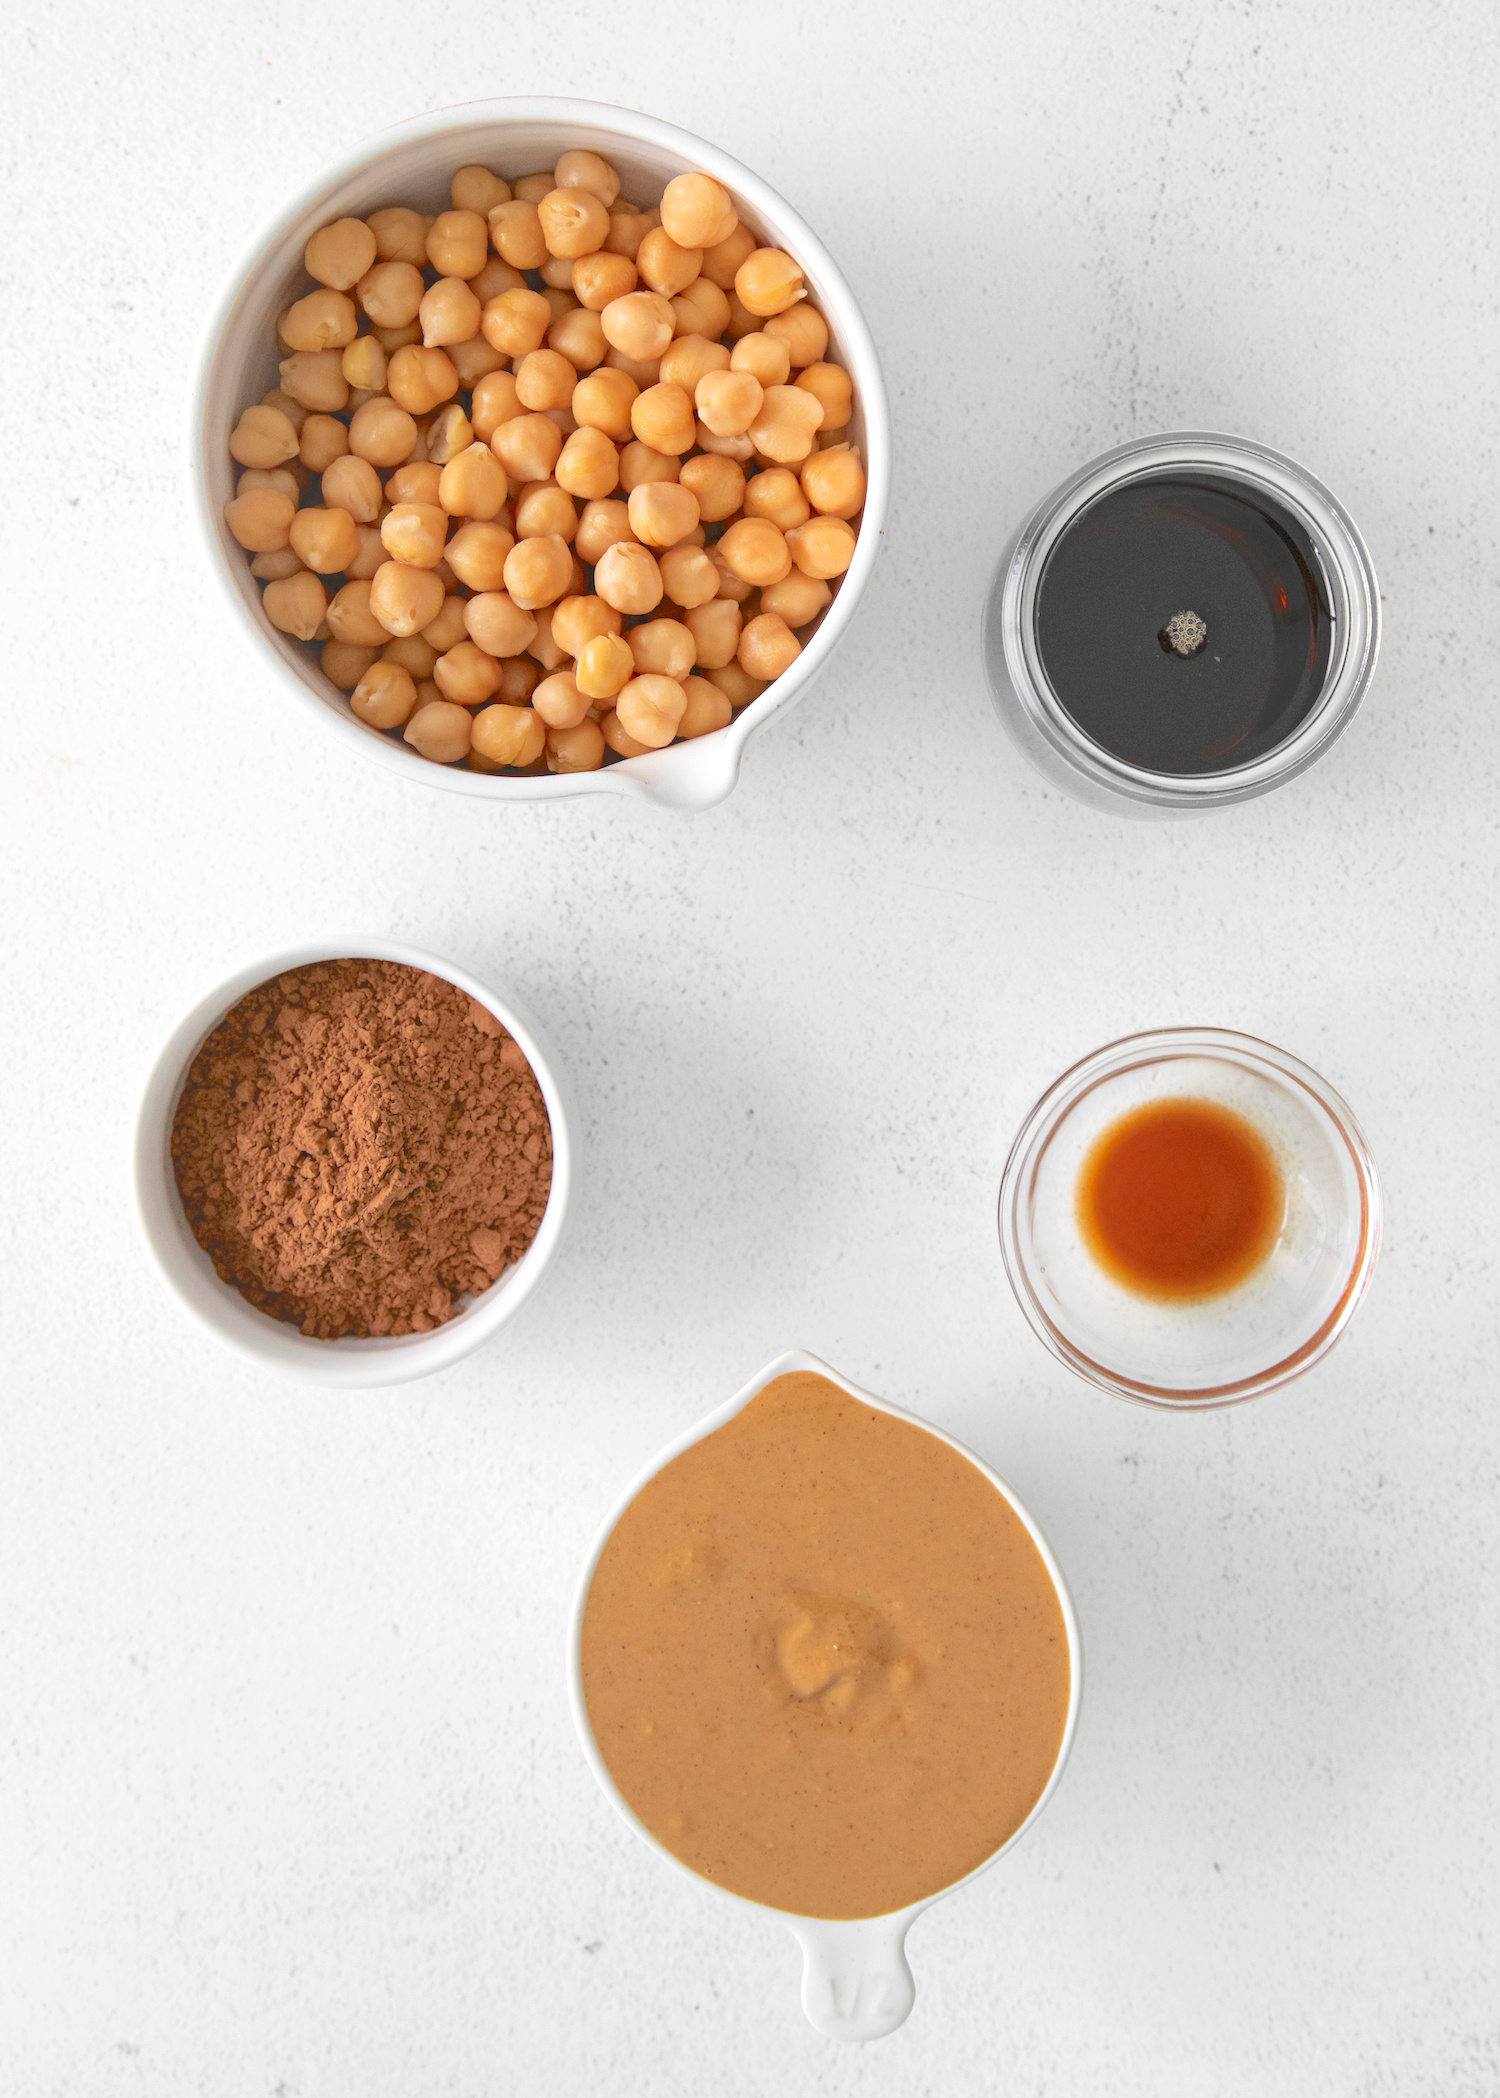 Ingredients needed to make Chocolate Hummus